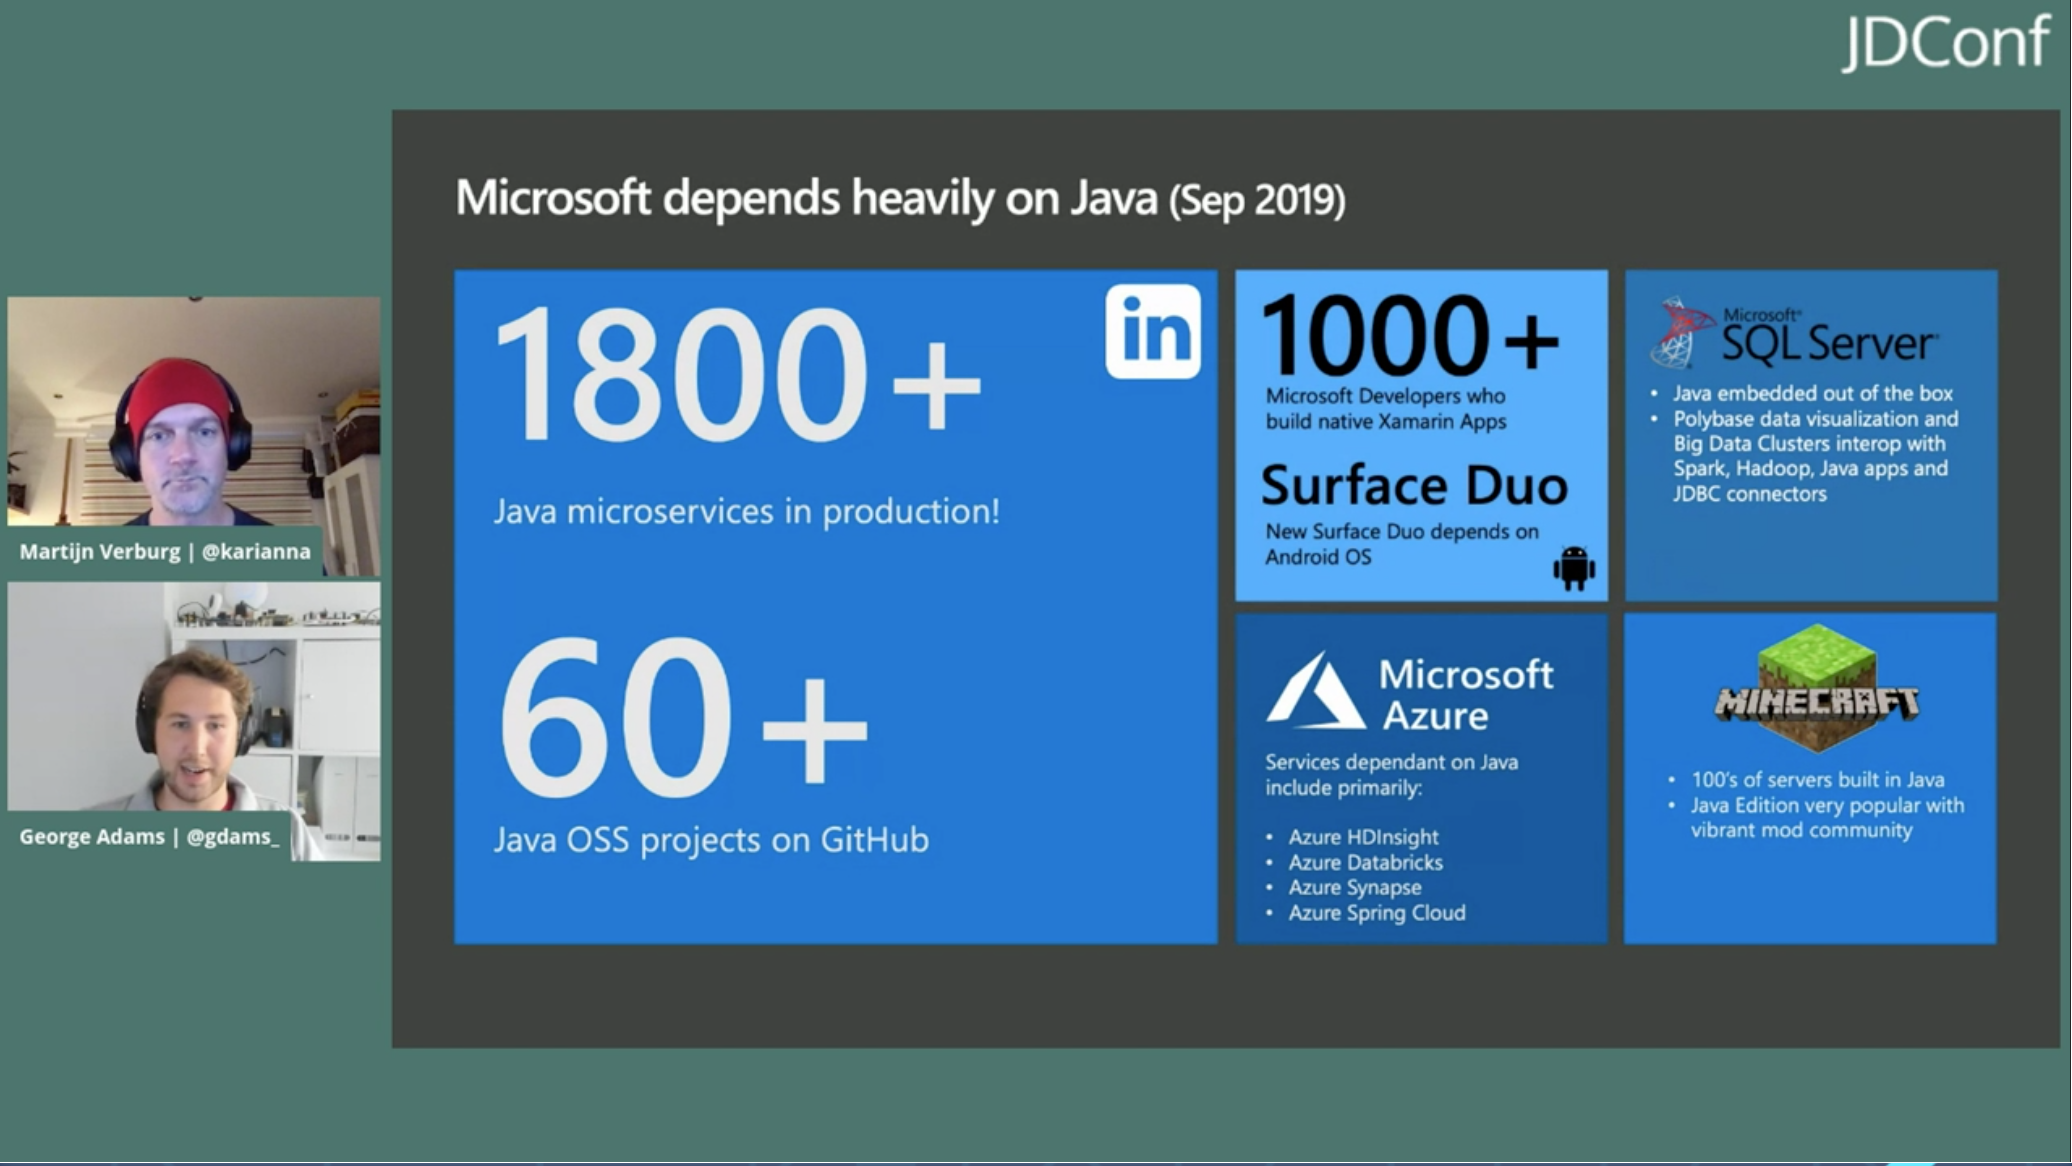 Usage of Java at Microsoft